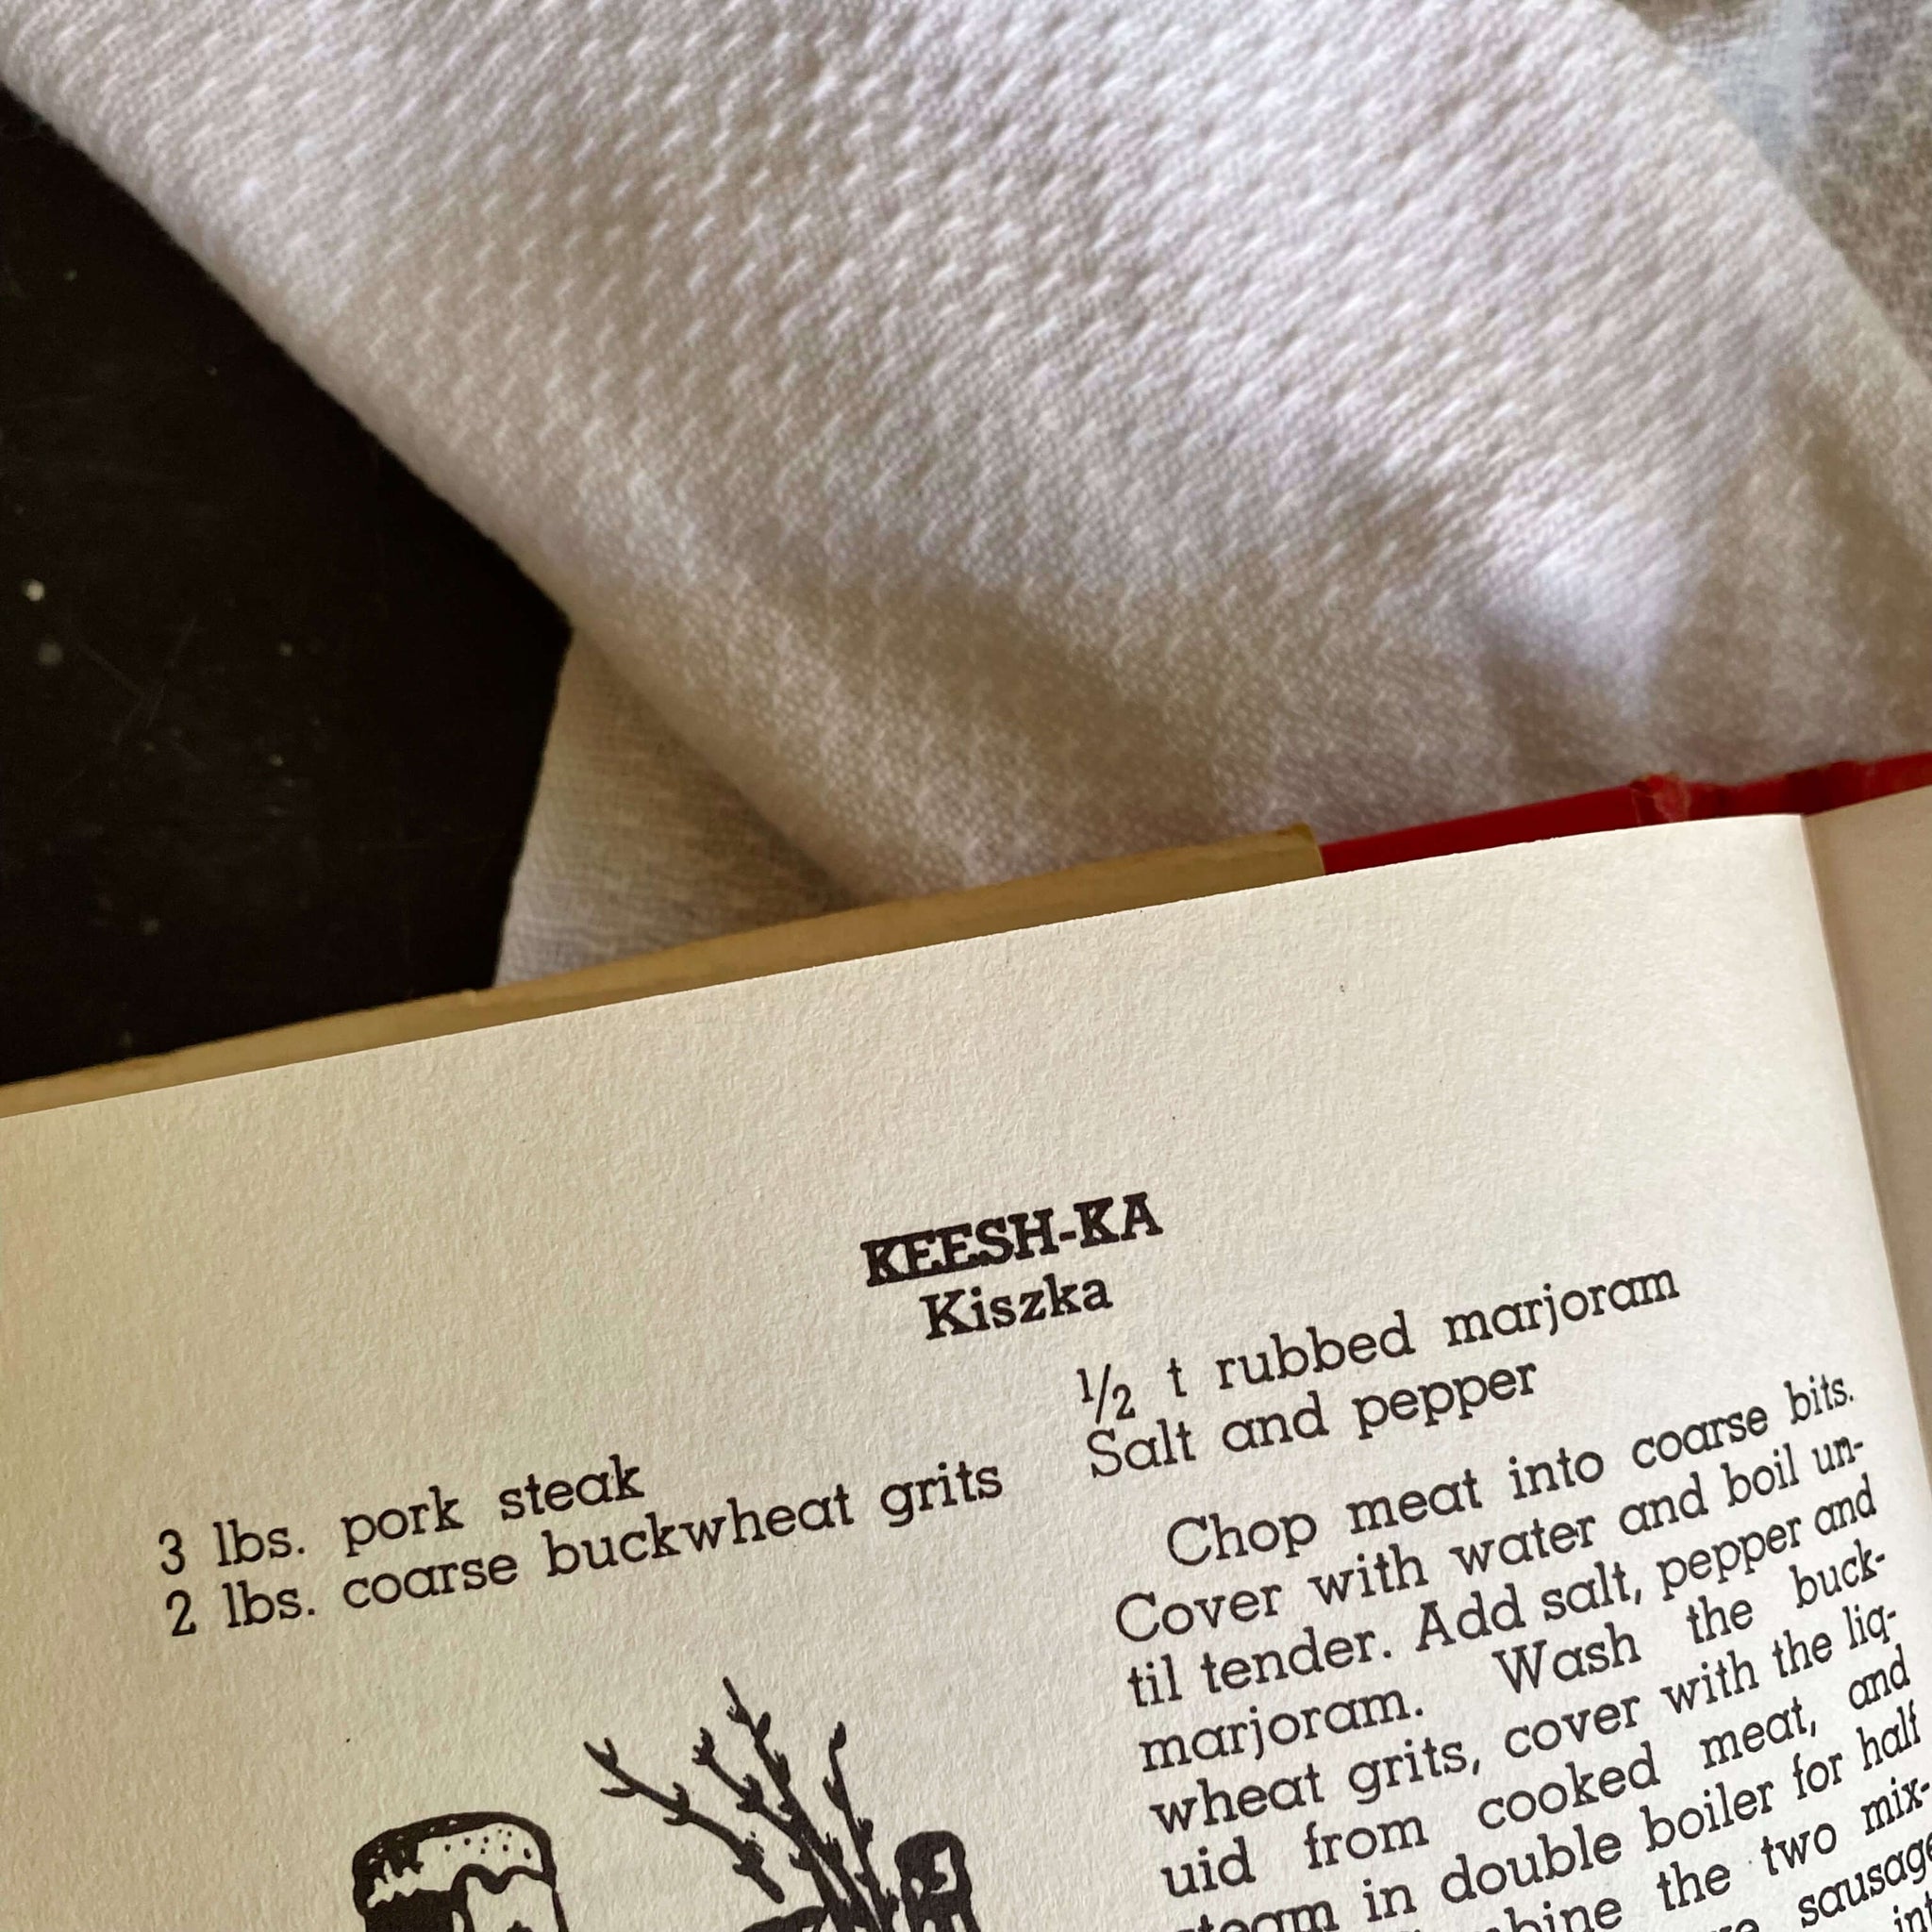 Treasured Polish Recipes for Americans by the Polanie Club -1977 Edition